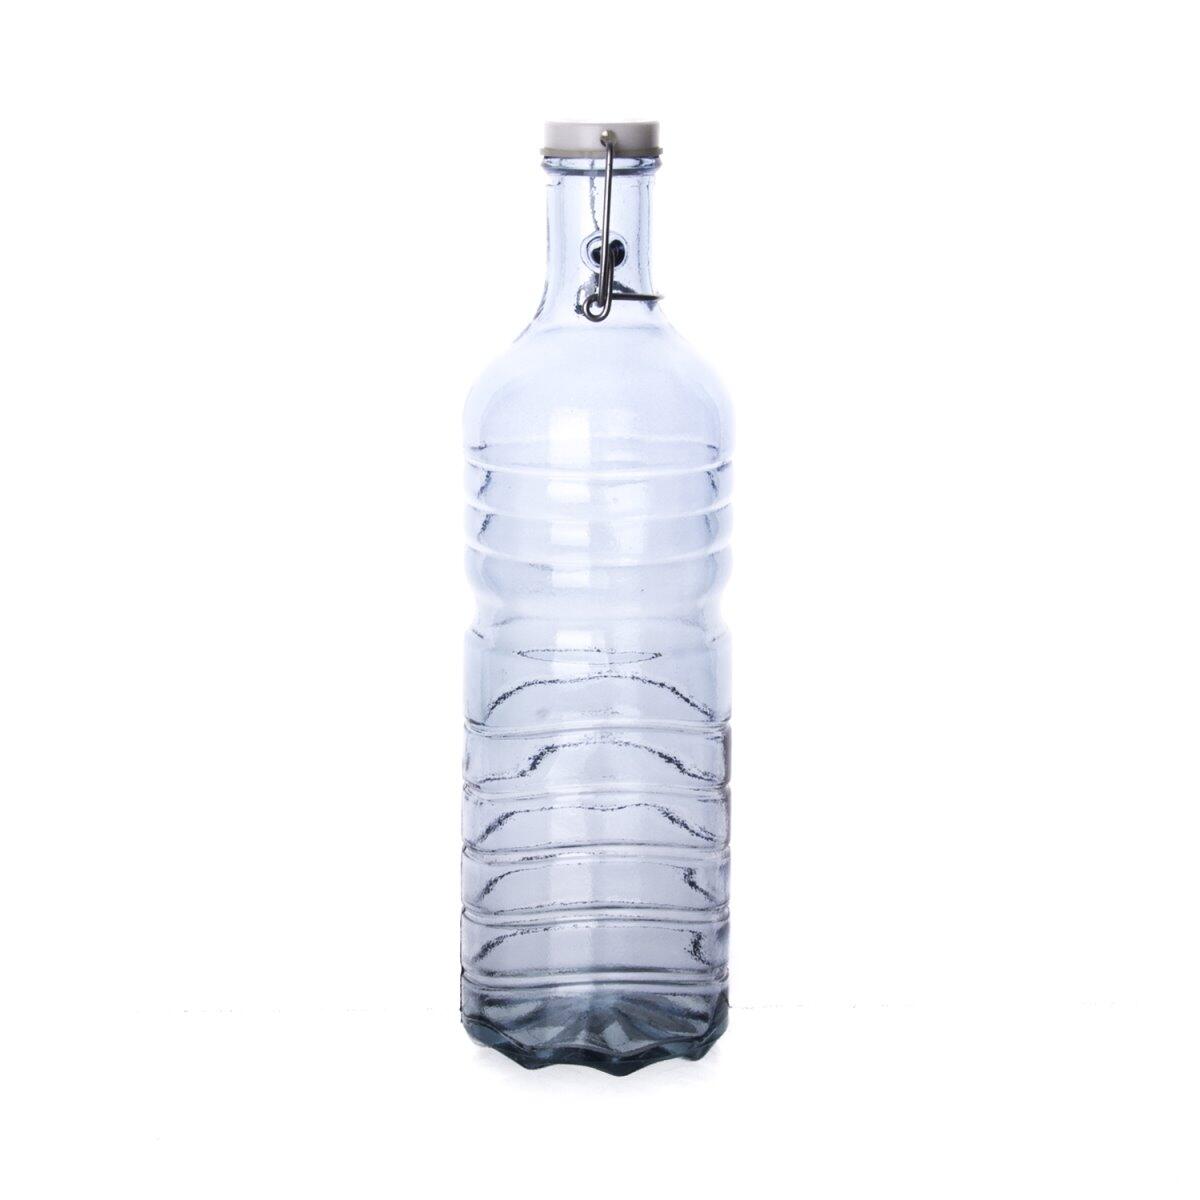 Sanmiguel Bottle with Stopper Cap 1.5 Liters